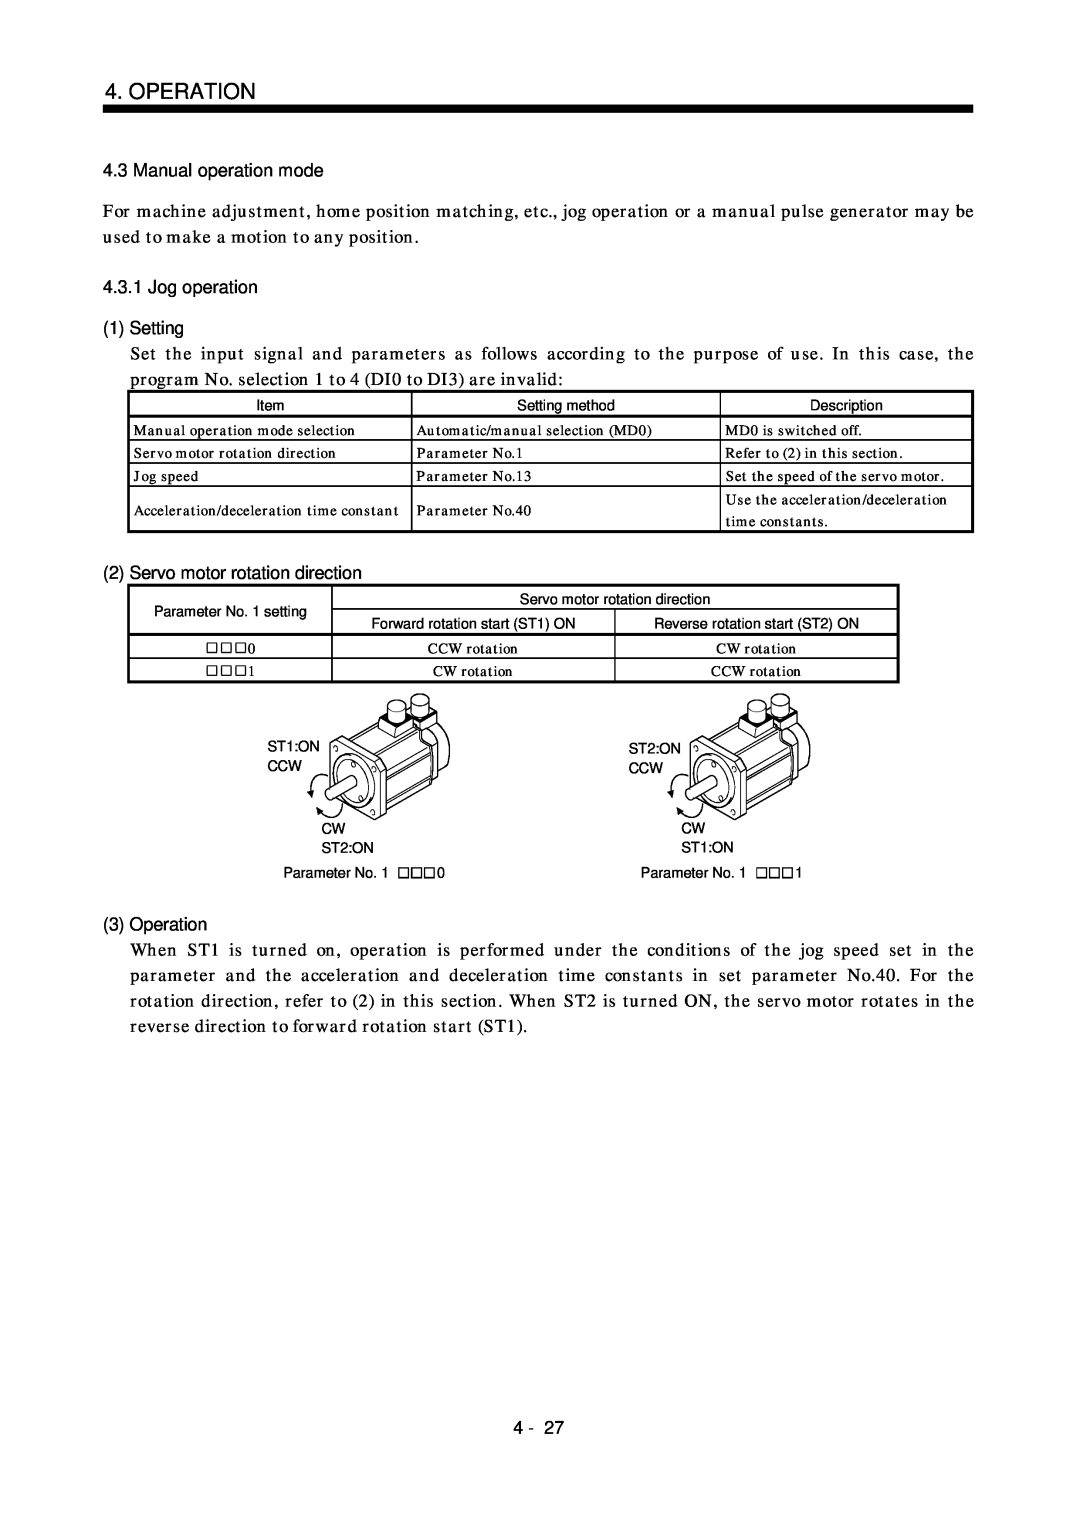 Mitsubishi Electronics MR-J2S- CL Manual operation mode, Jog operation 1Setting, Servo motor rotation direction, Operation 